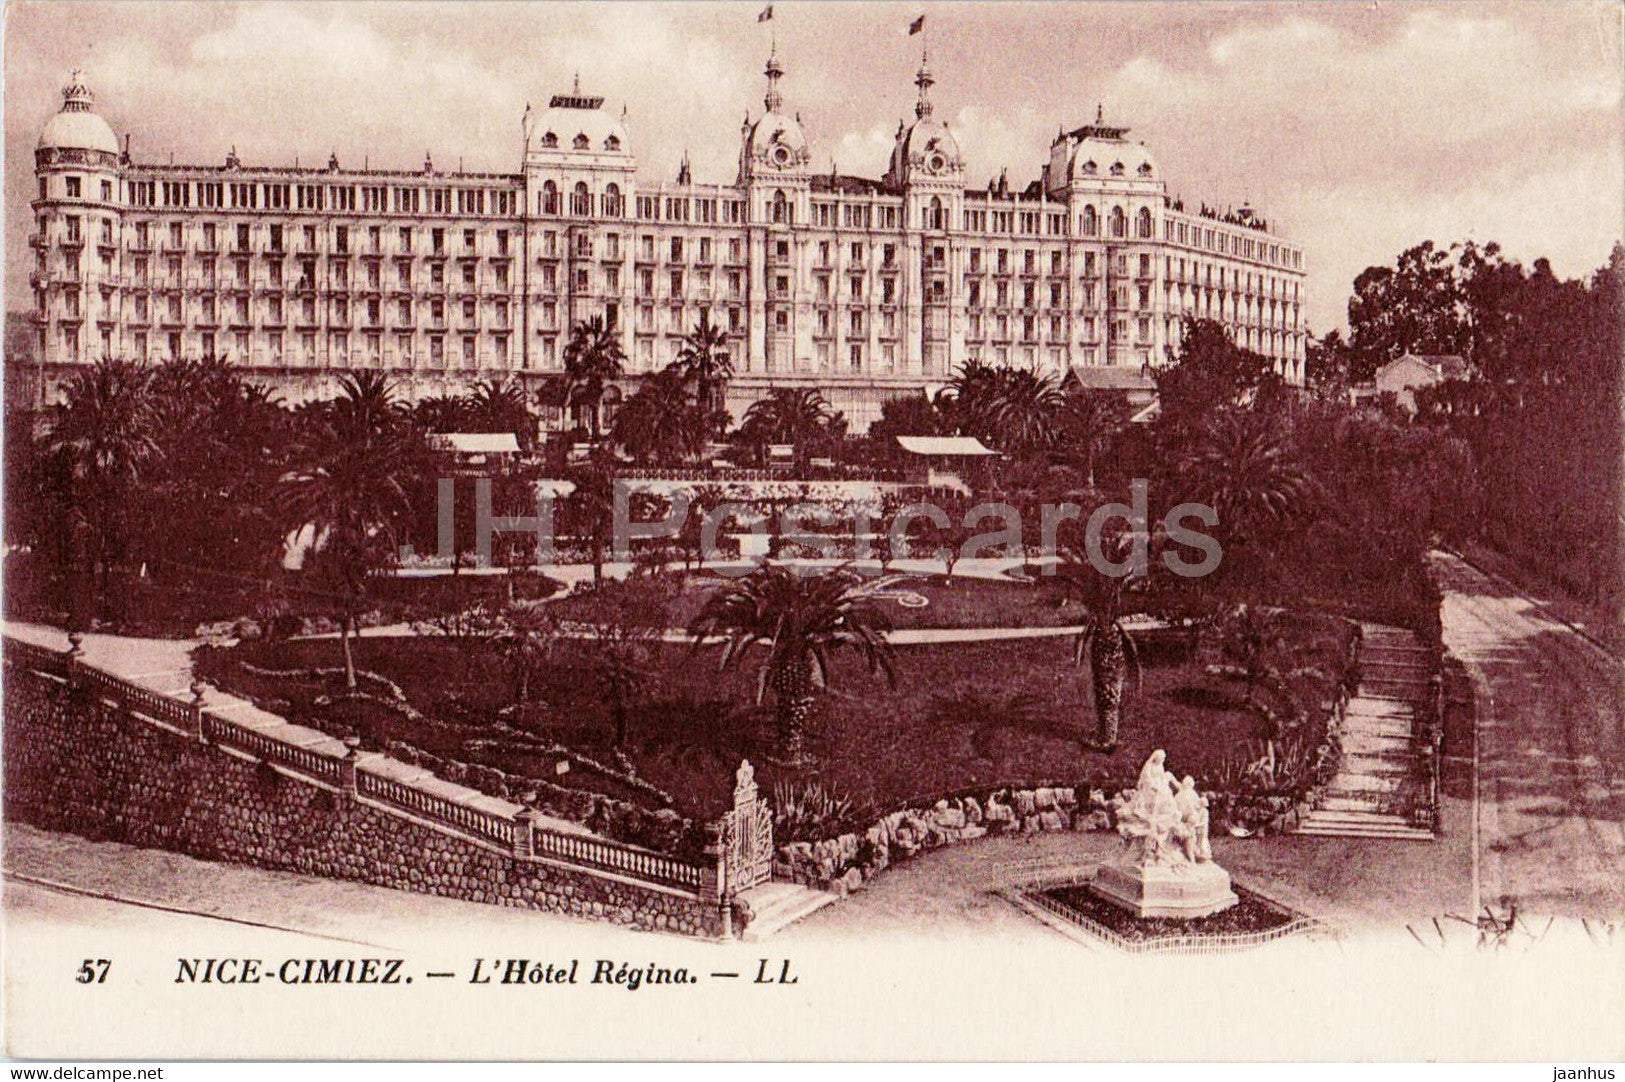 Nice Cimiez - L'Hotel Regina - hotel - 57 - old postcard - France - unused - JH Postcards